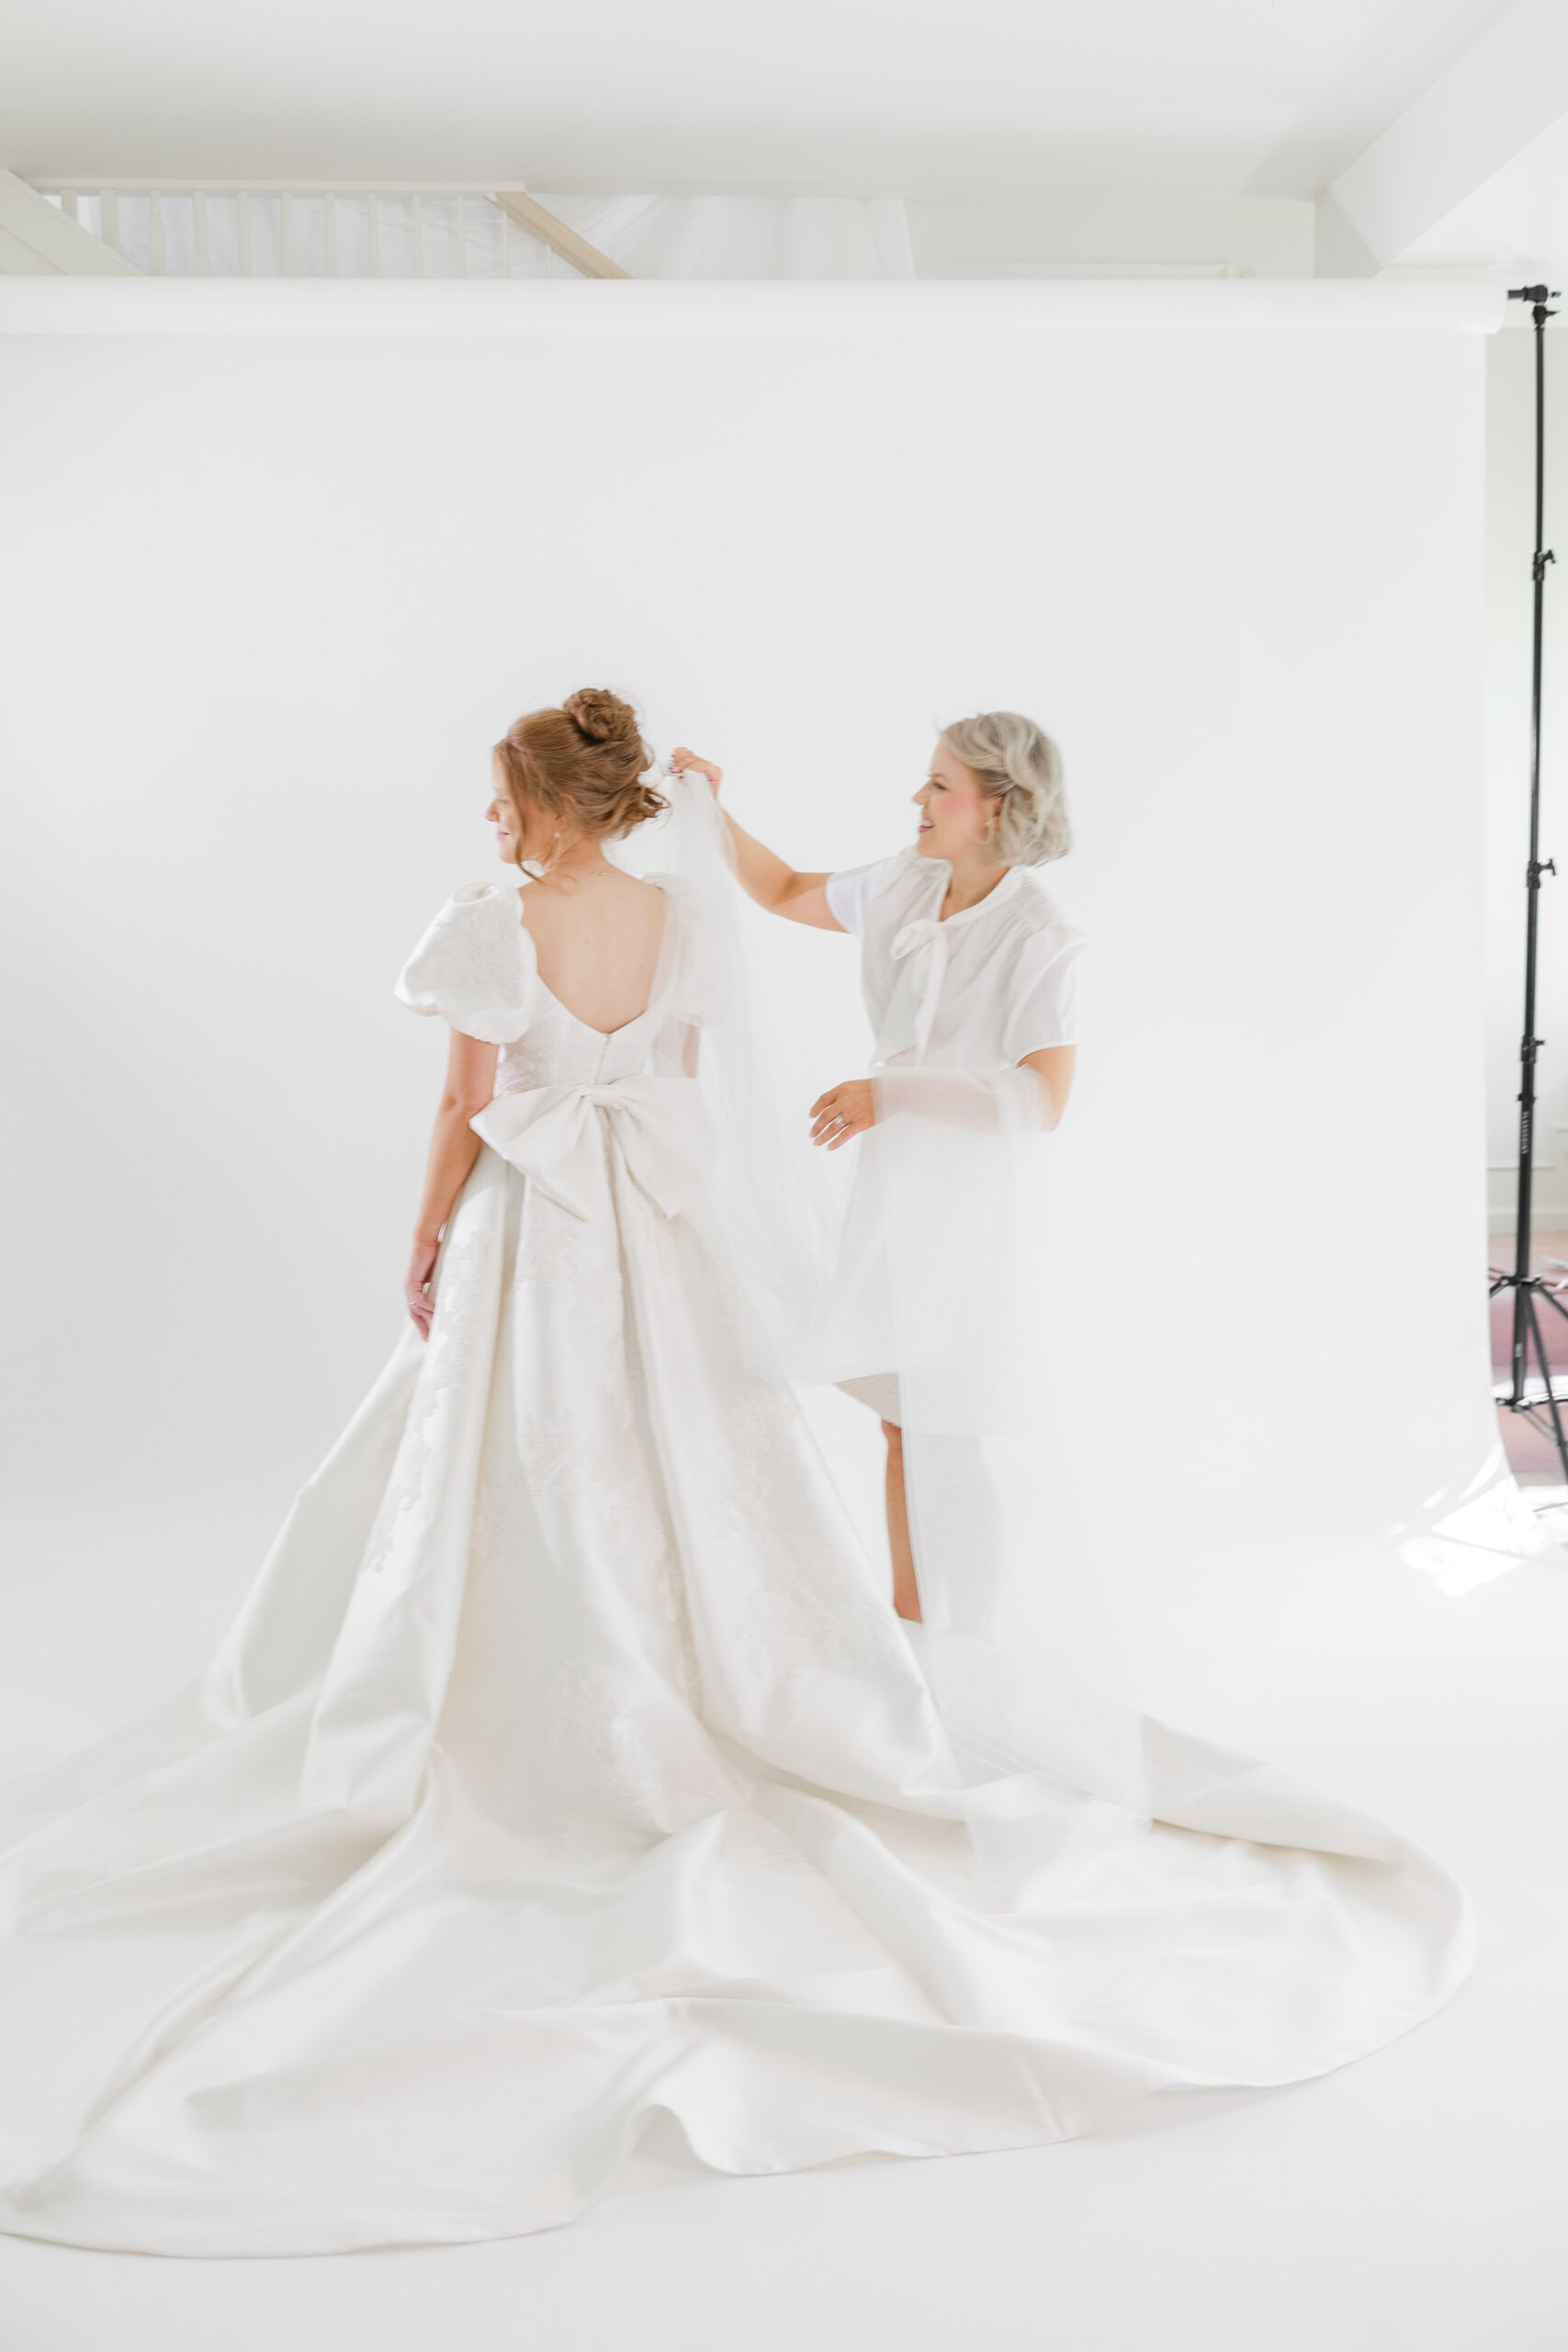 Melissa in sarah kolis couture gown